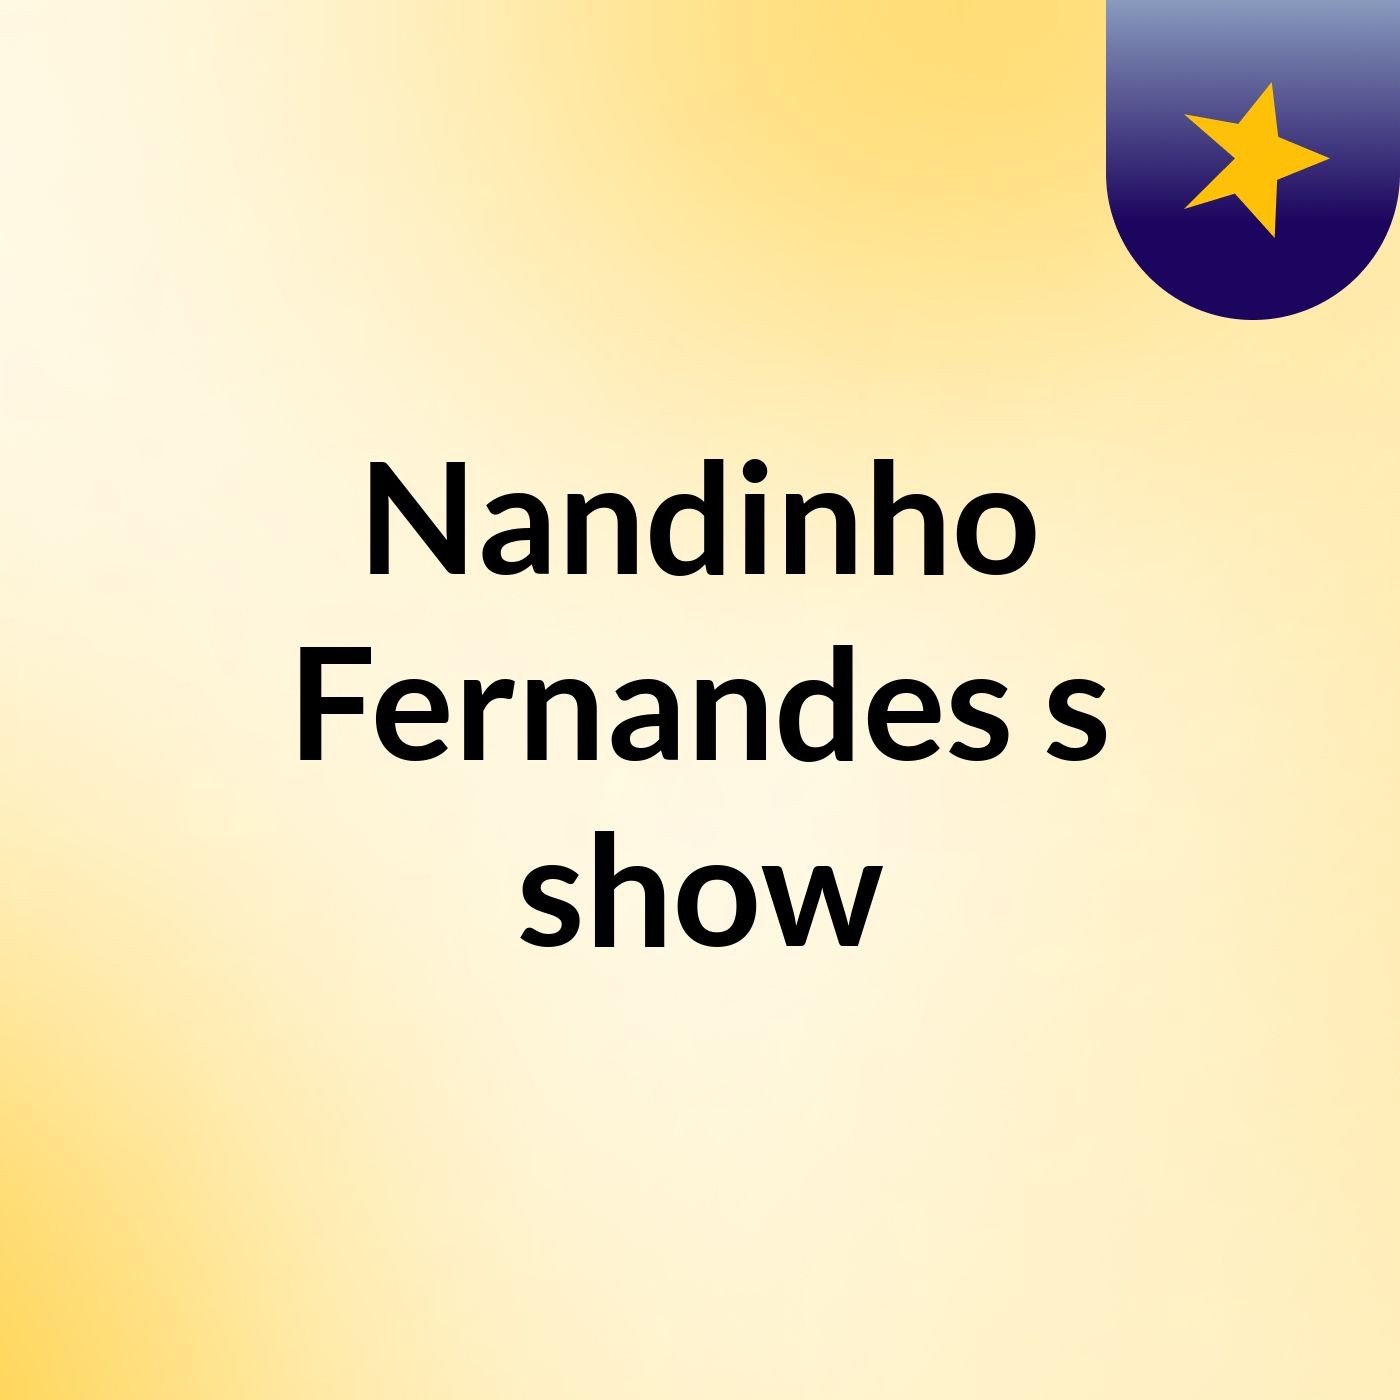 Nandinho Fernandes's show